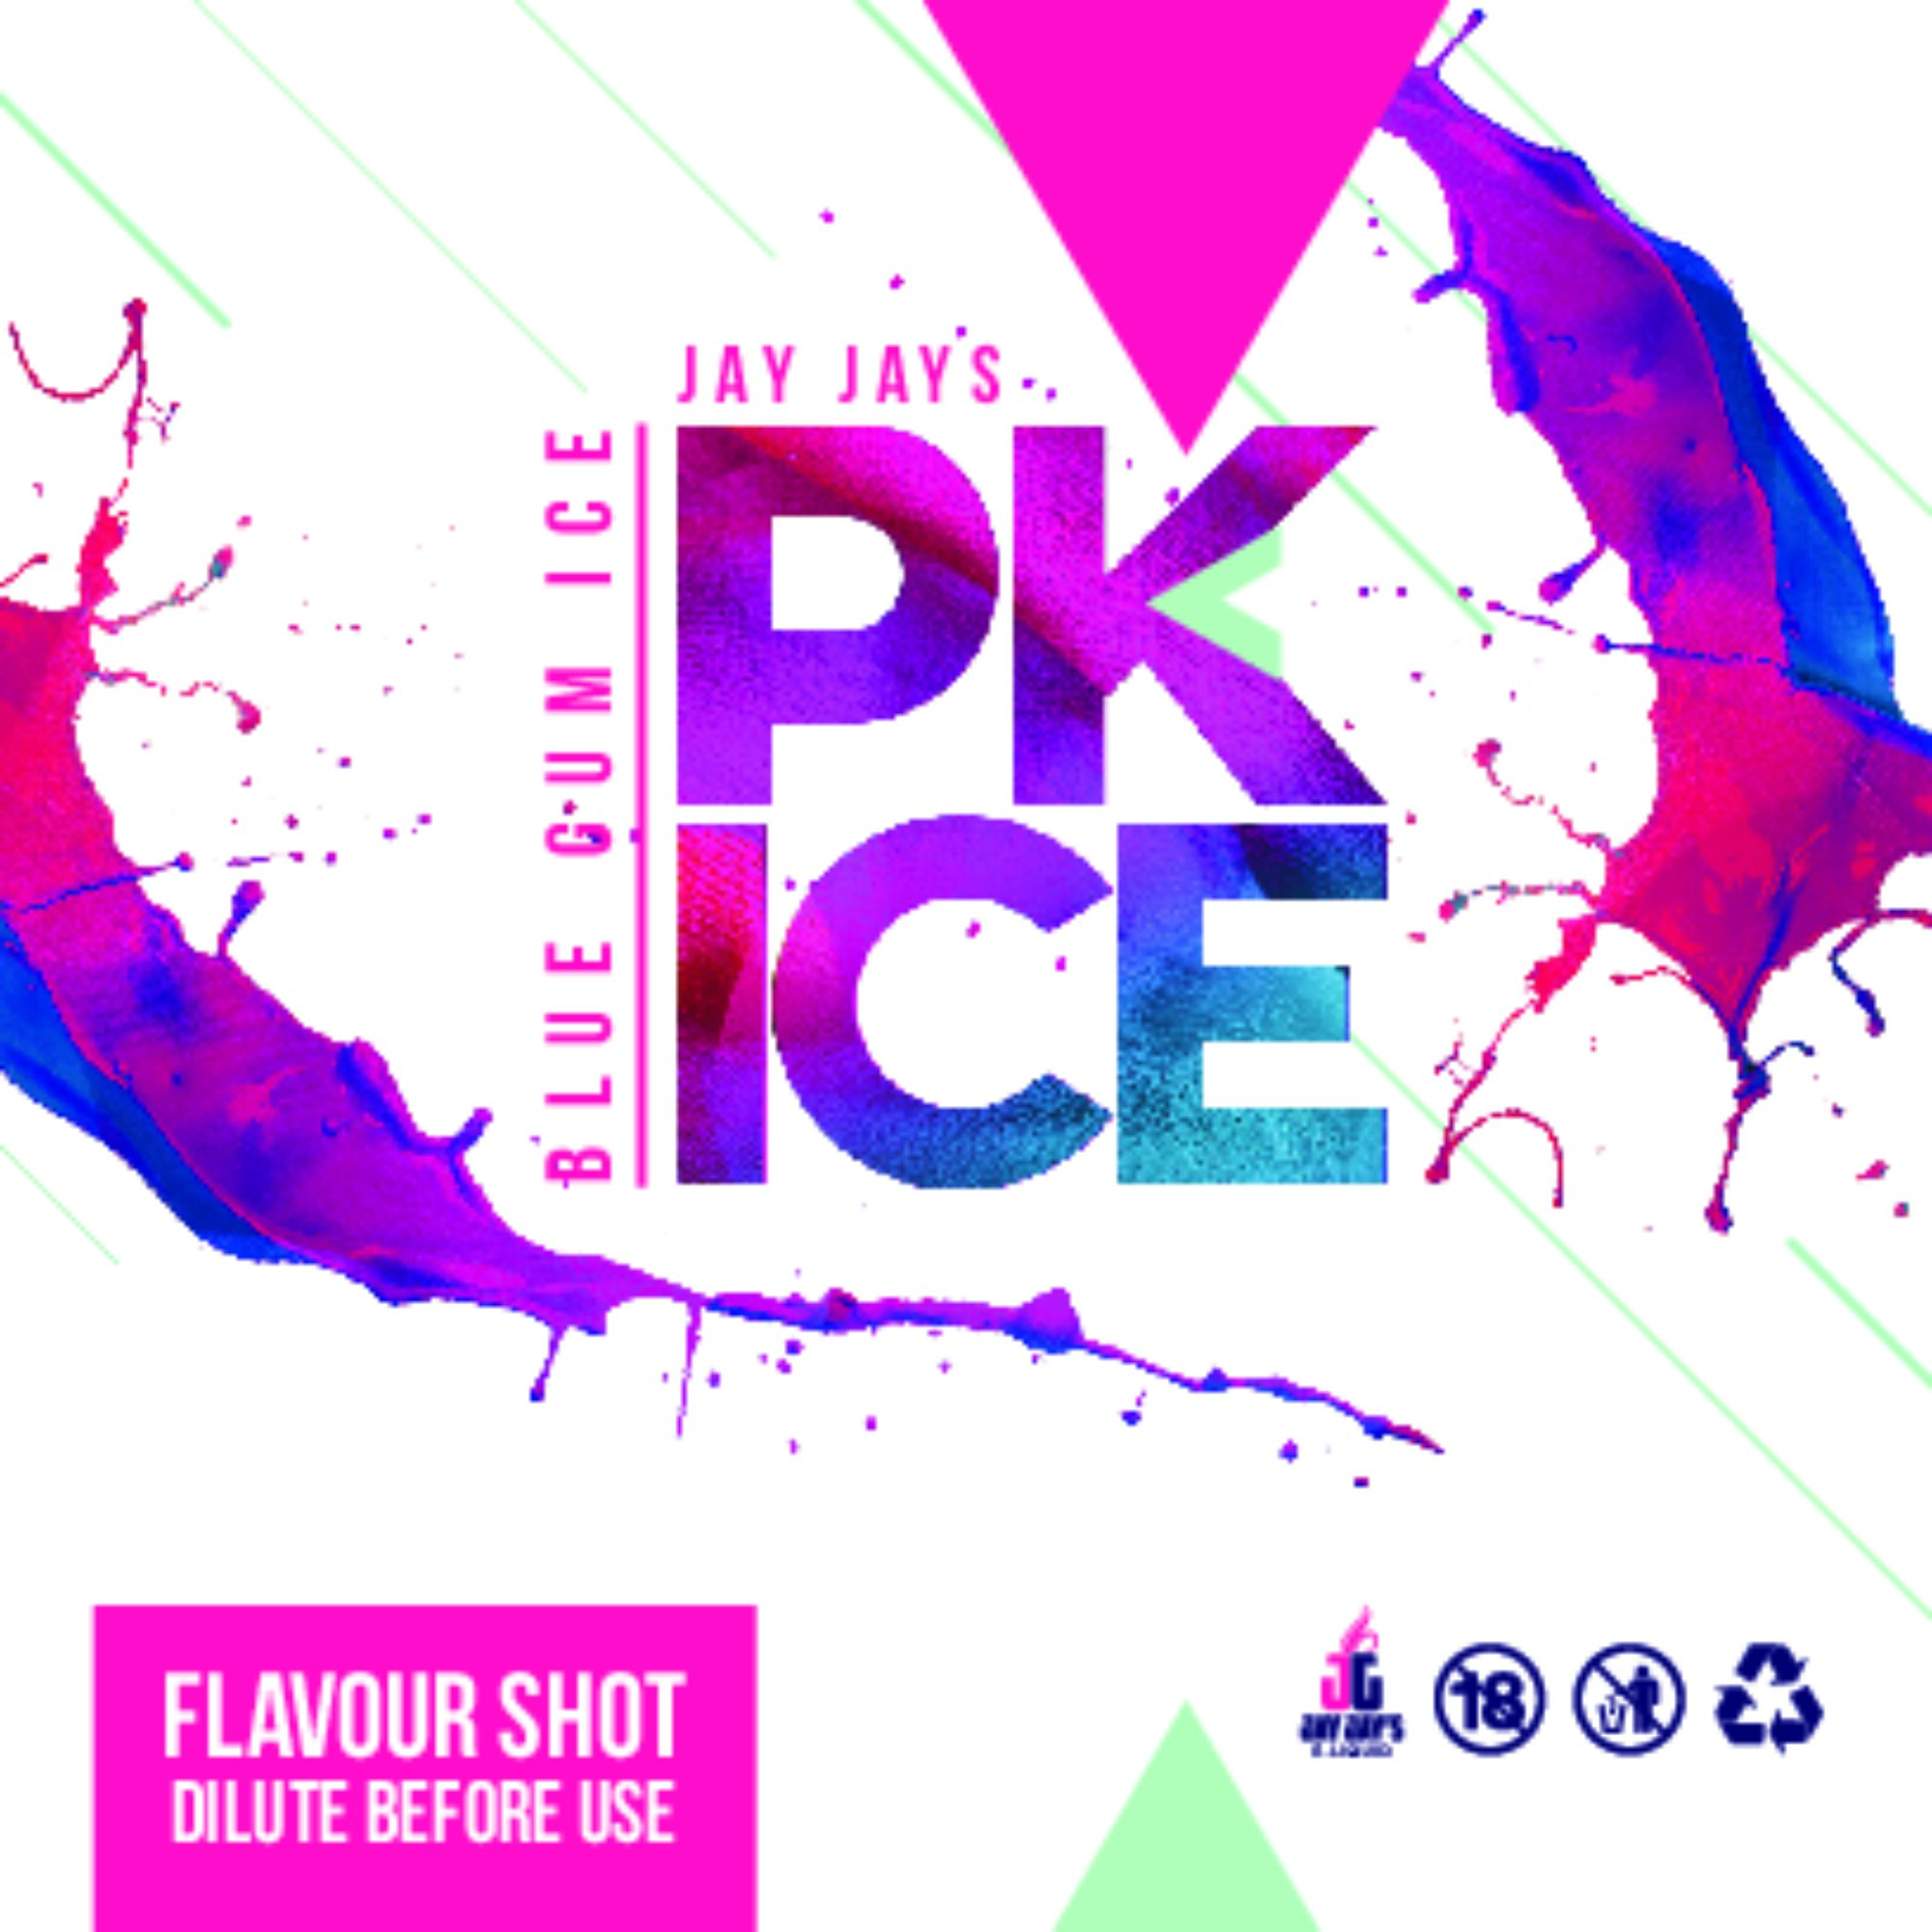 JJJ_PK Ice_Blue gum_Flavour Shot_60ml